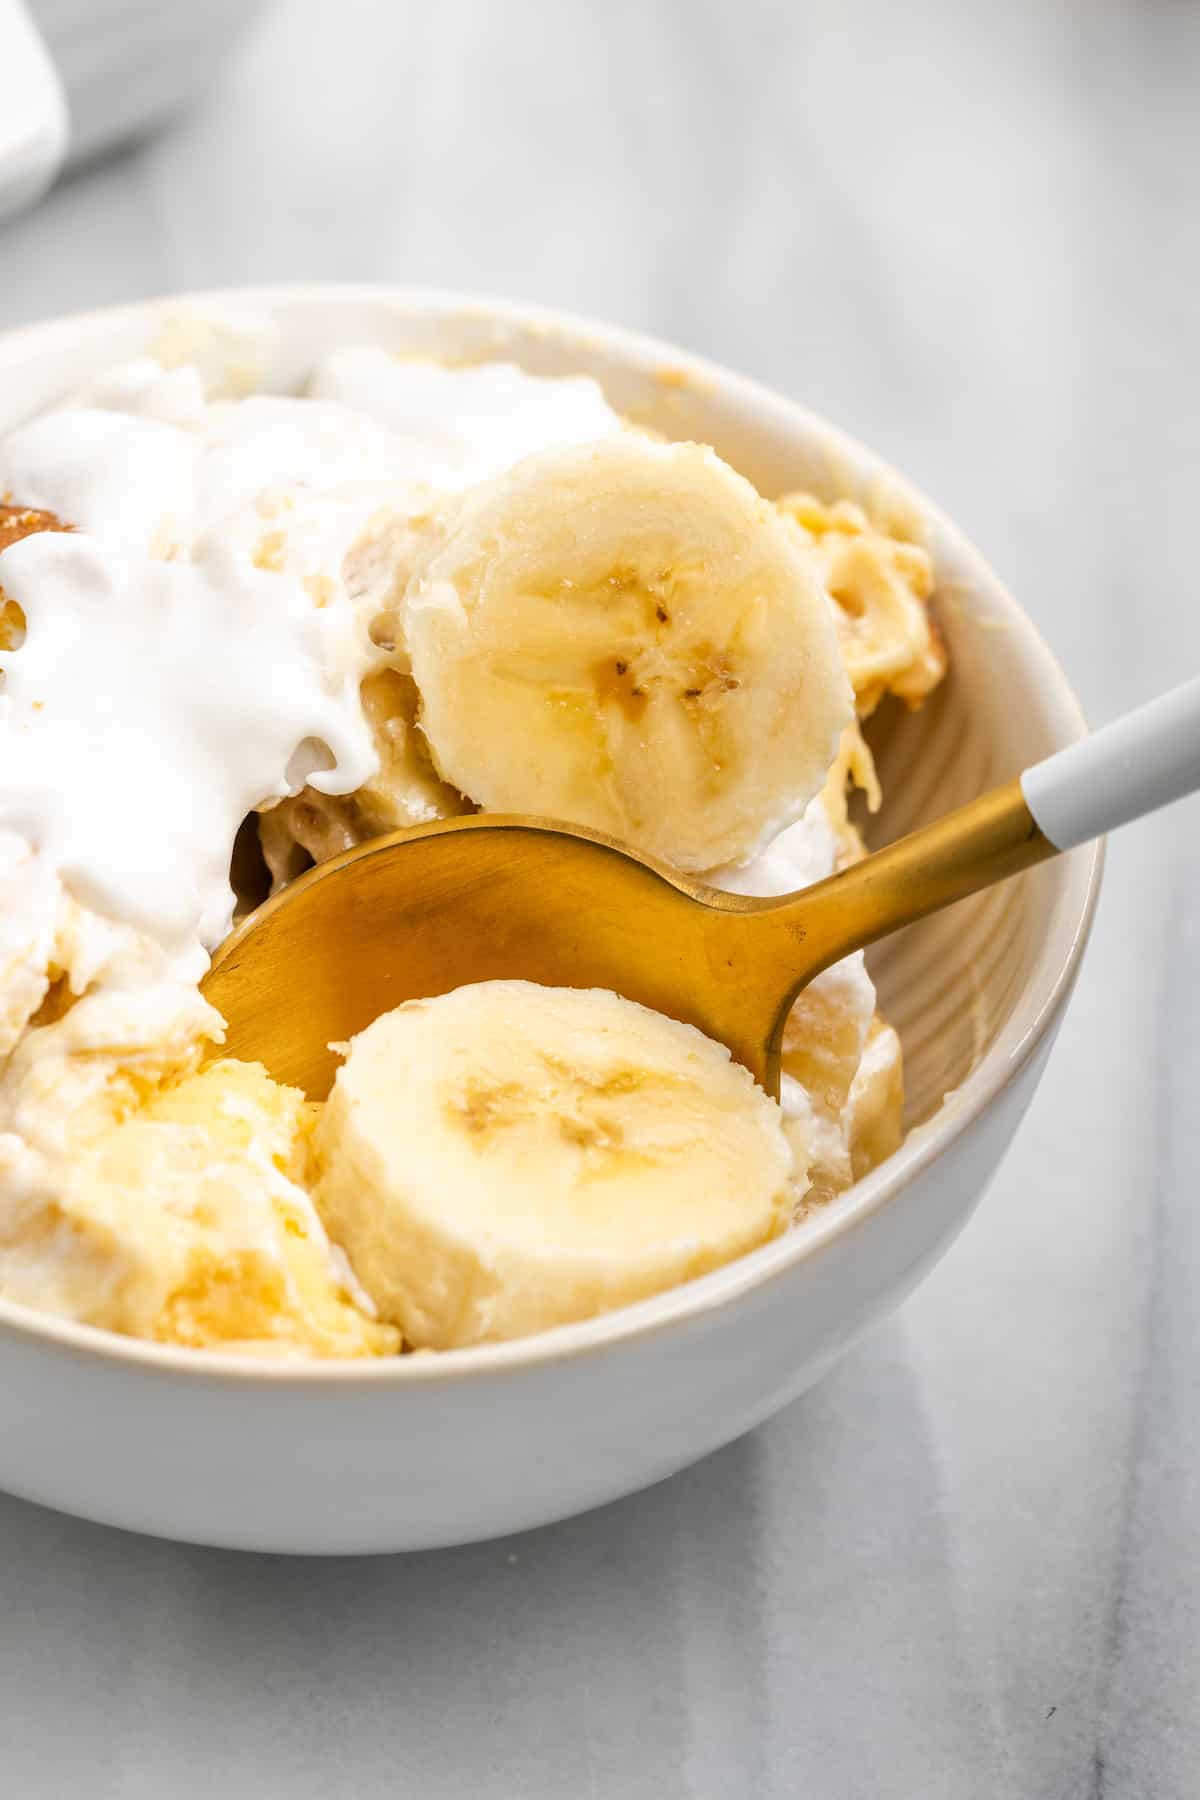 Spoon digging into vegan banana pudding